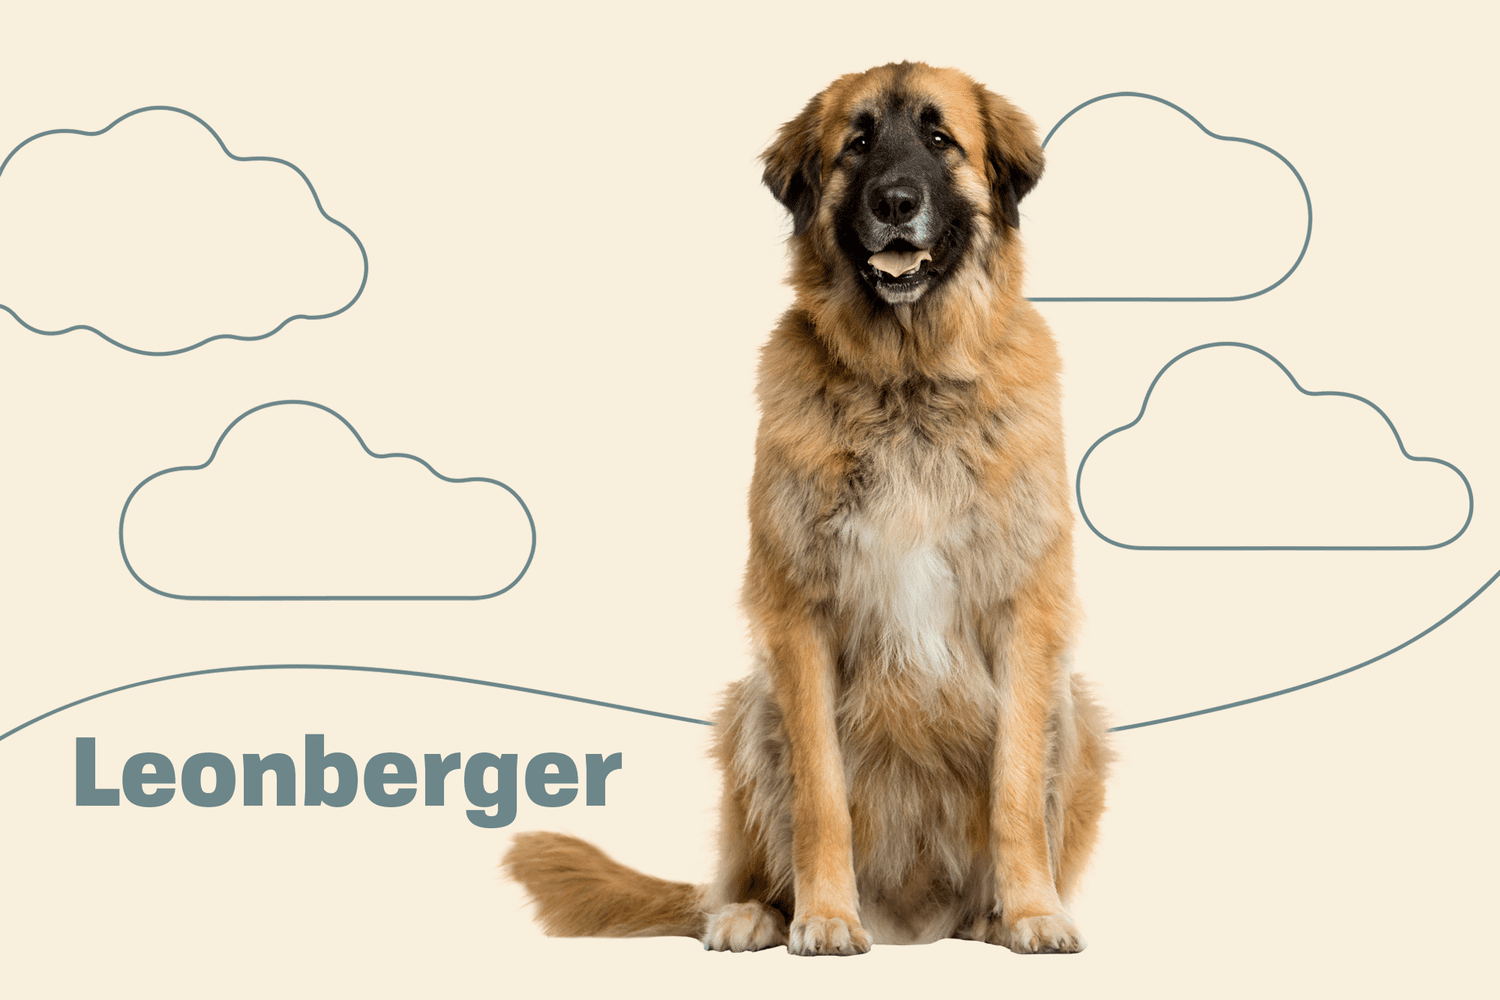 leonberger dog cost